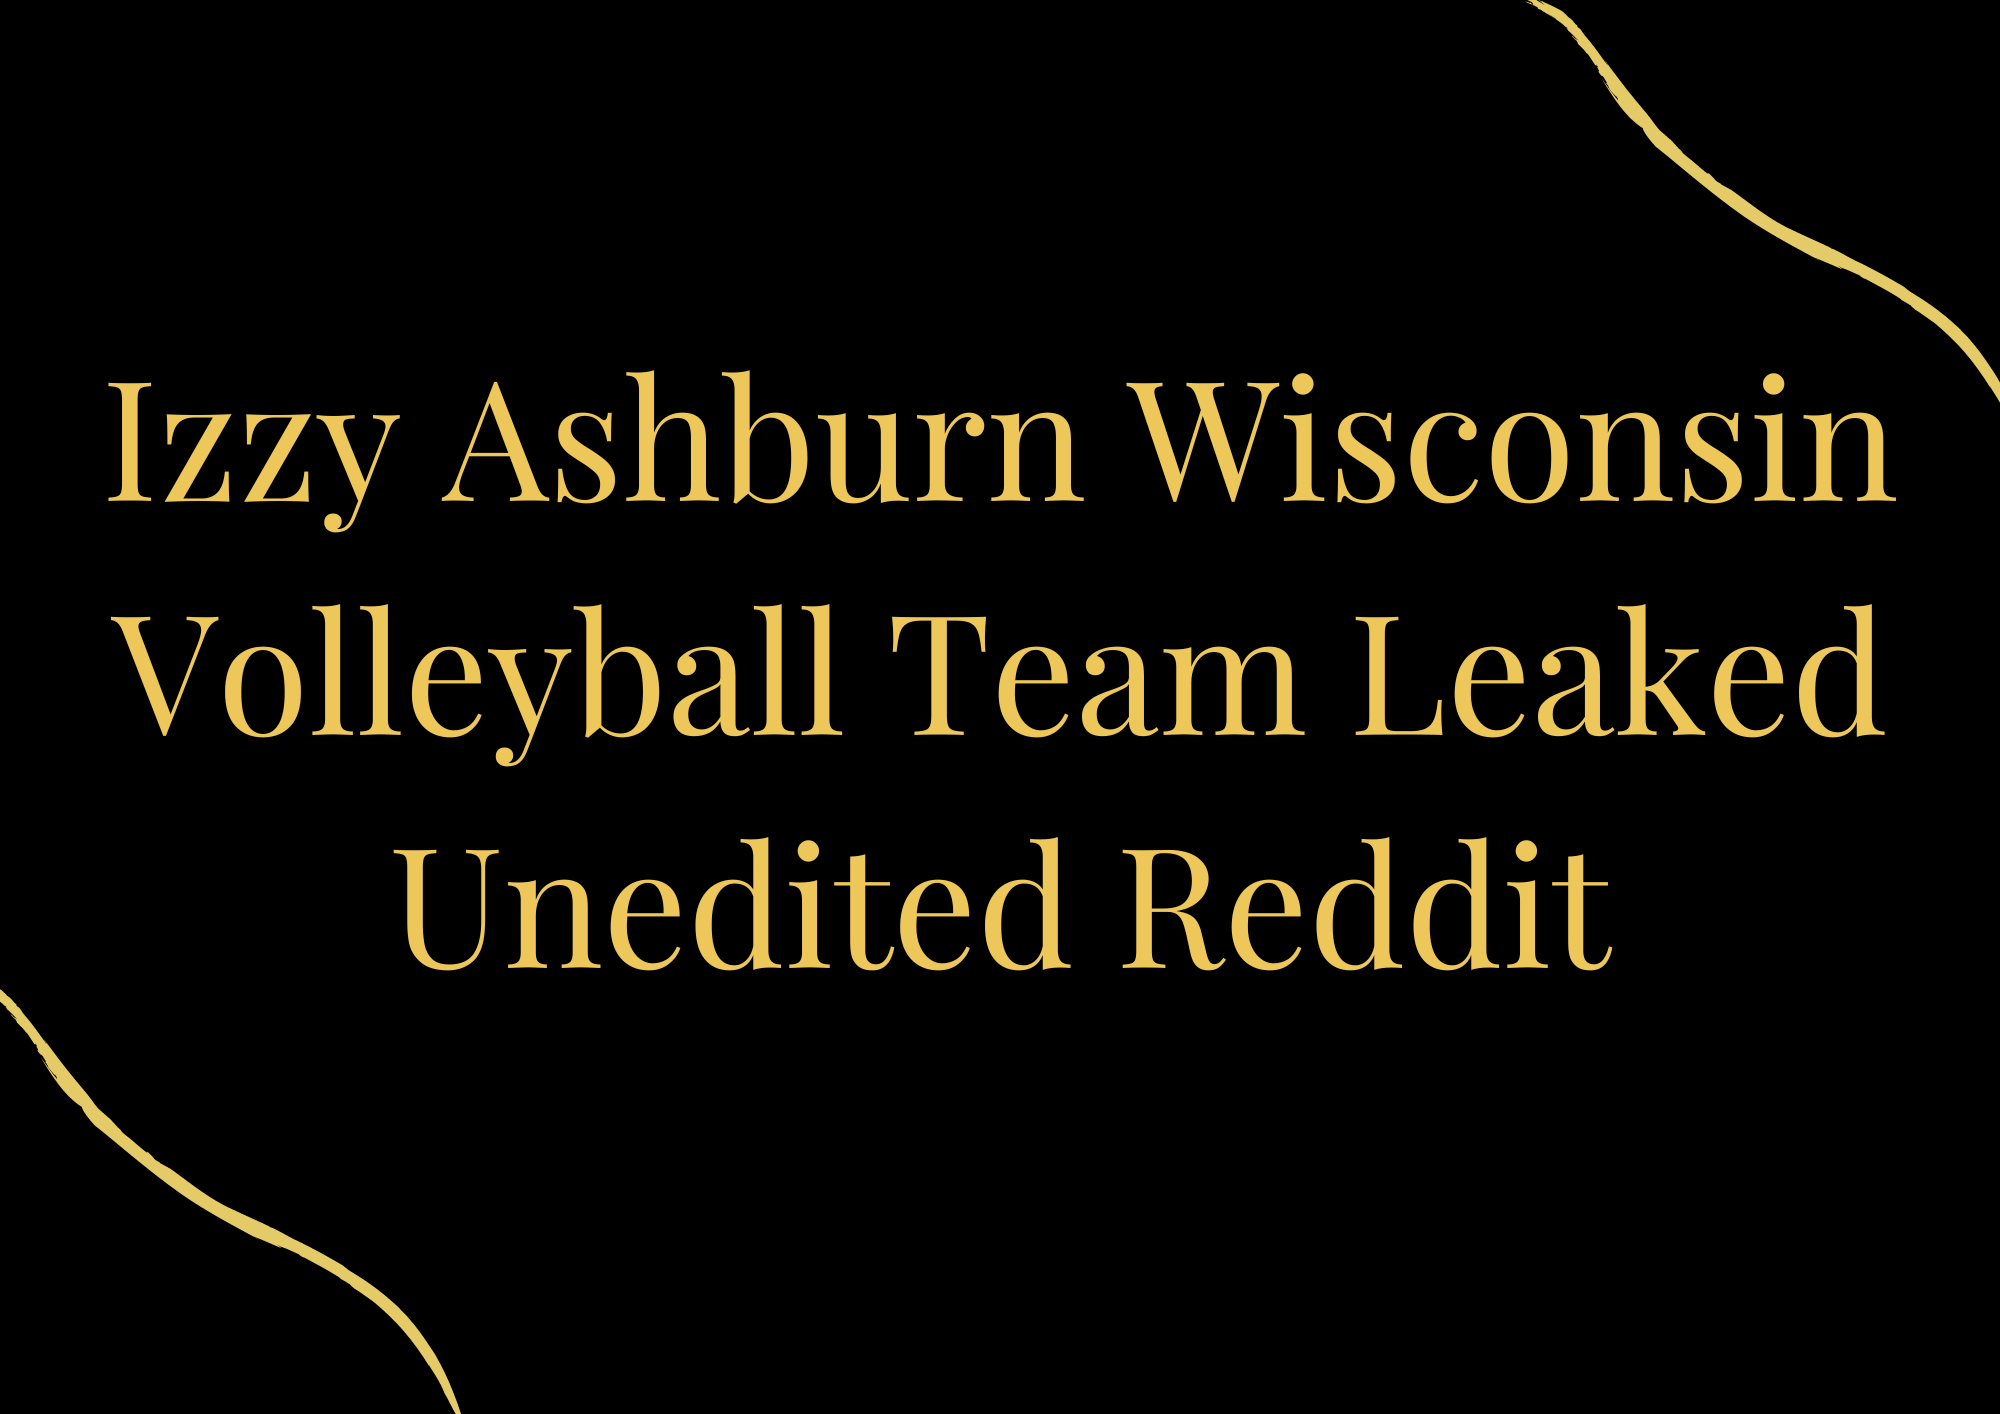 Izzy Ashburn Wisconsin Volleyball Team Leaked Unedited Reddit